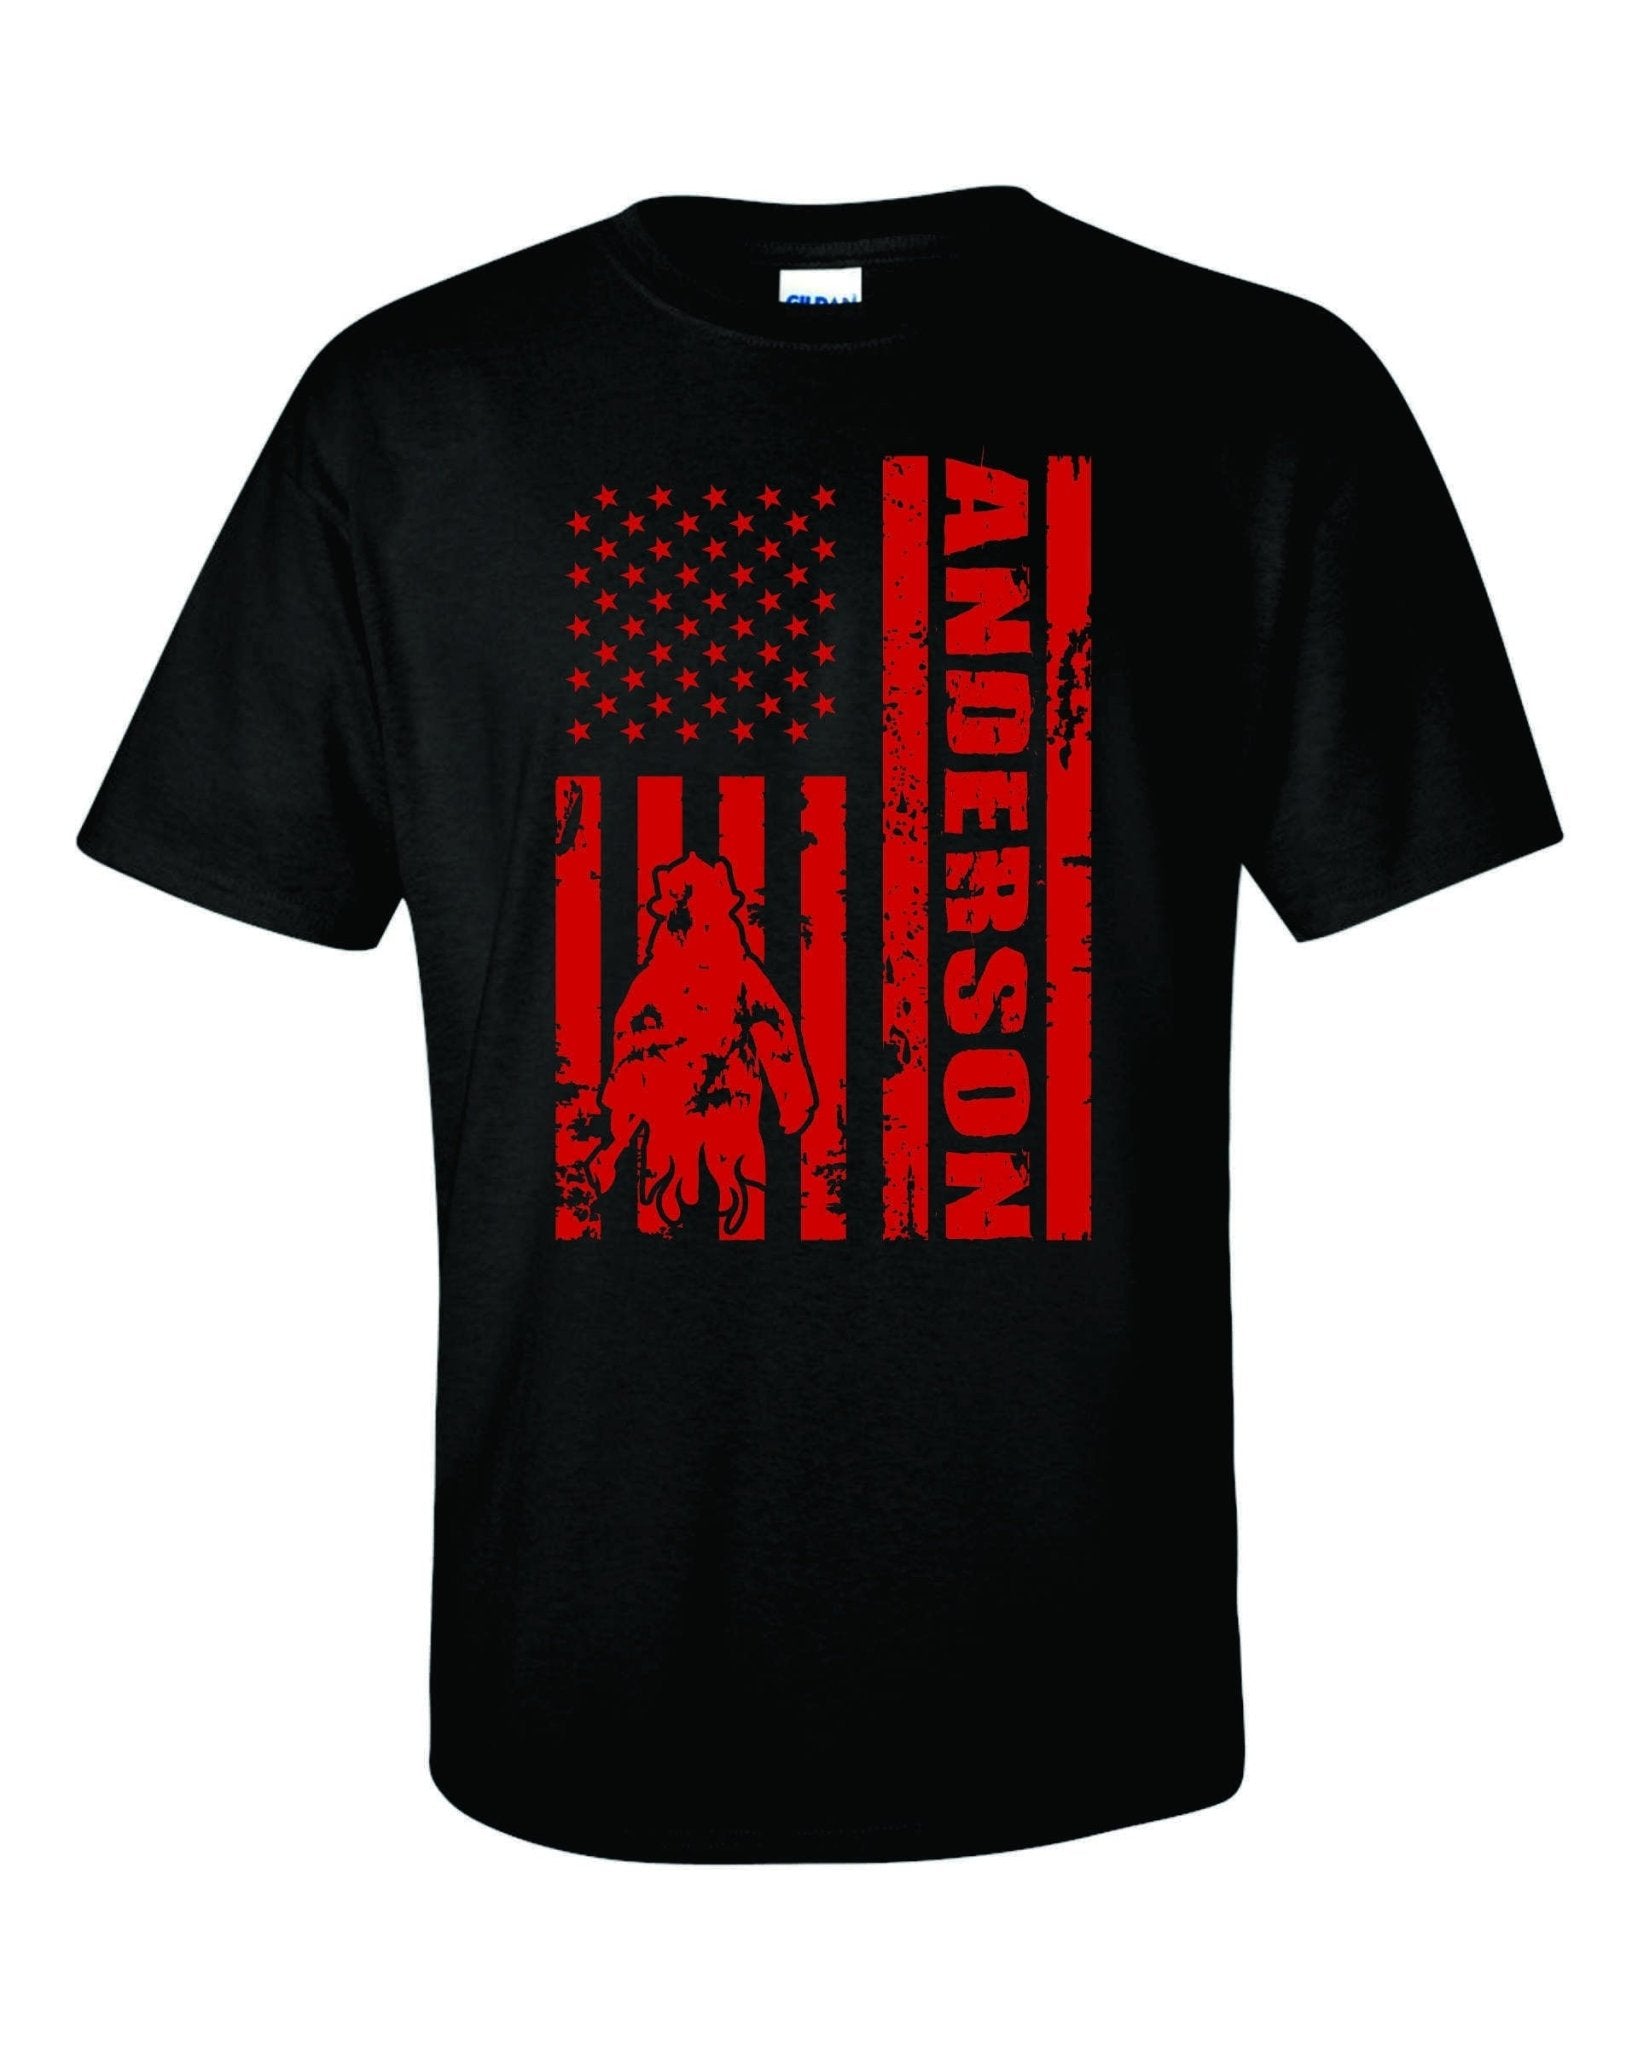 Personalized Hunting and Fishing Shirt - Custom Name American Flag